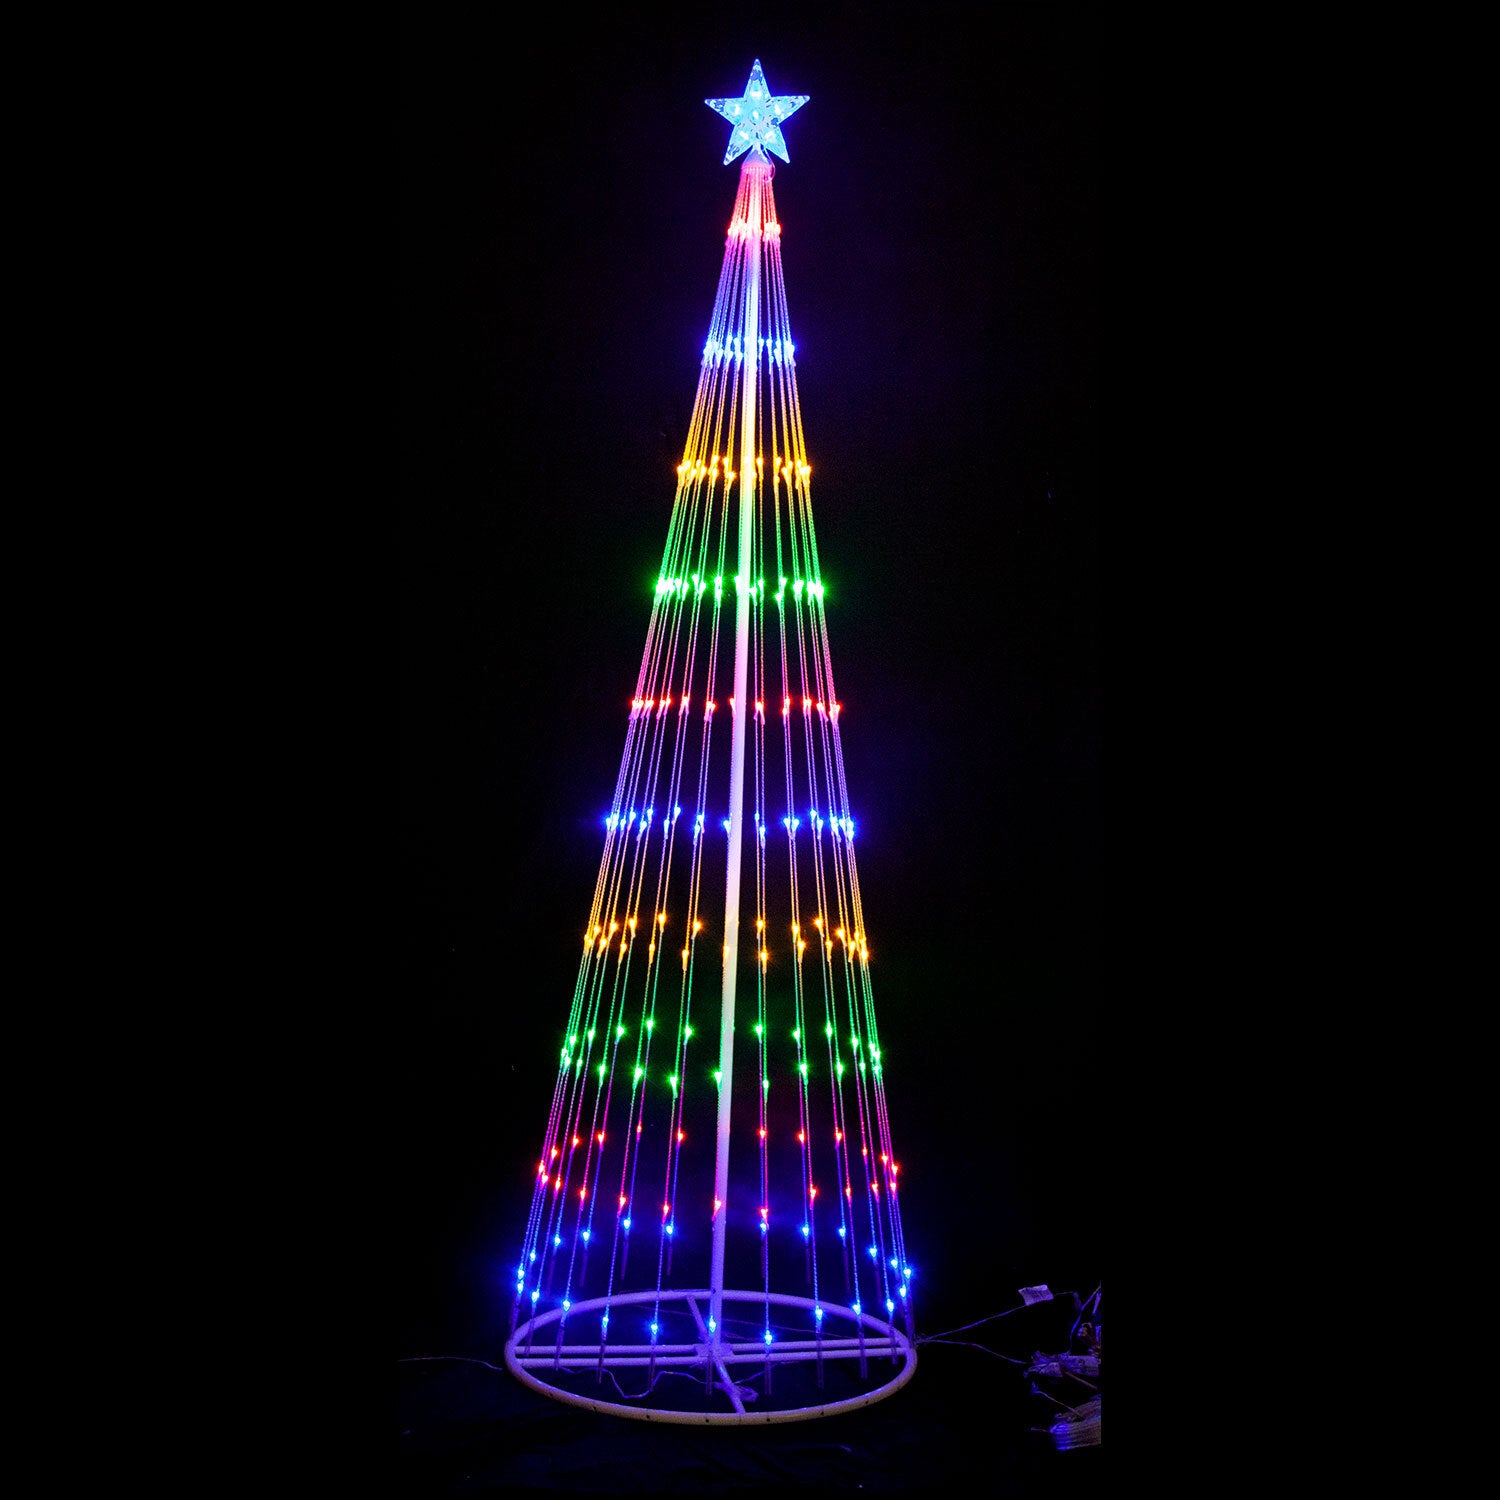 Circling LED Light Christmas Tree with Star | Buy Christmas Decorations ...